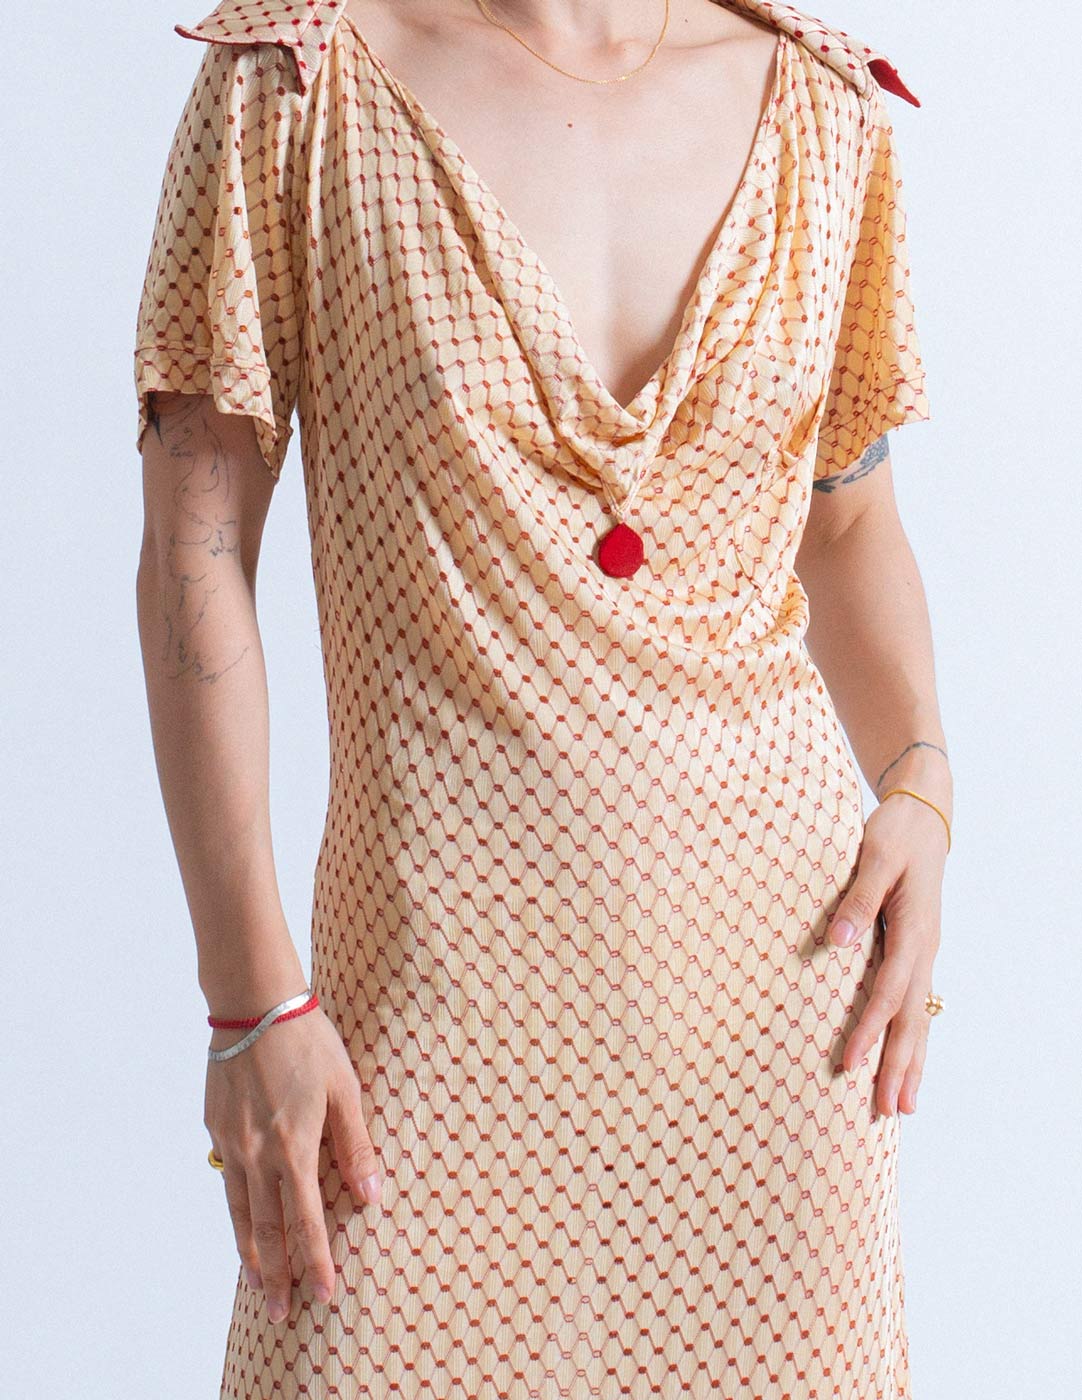 Jean Paul Gaultier vintage perforated drape dress detail